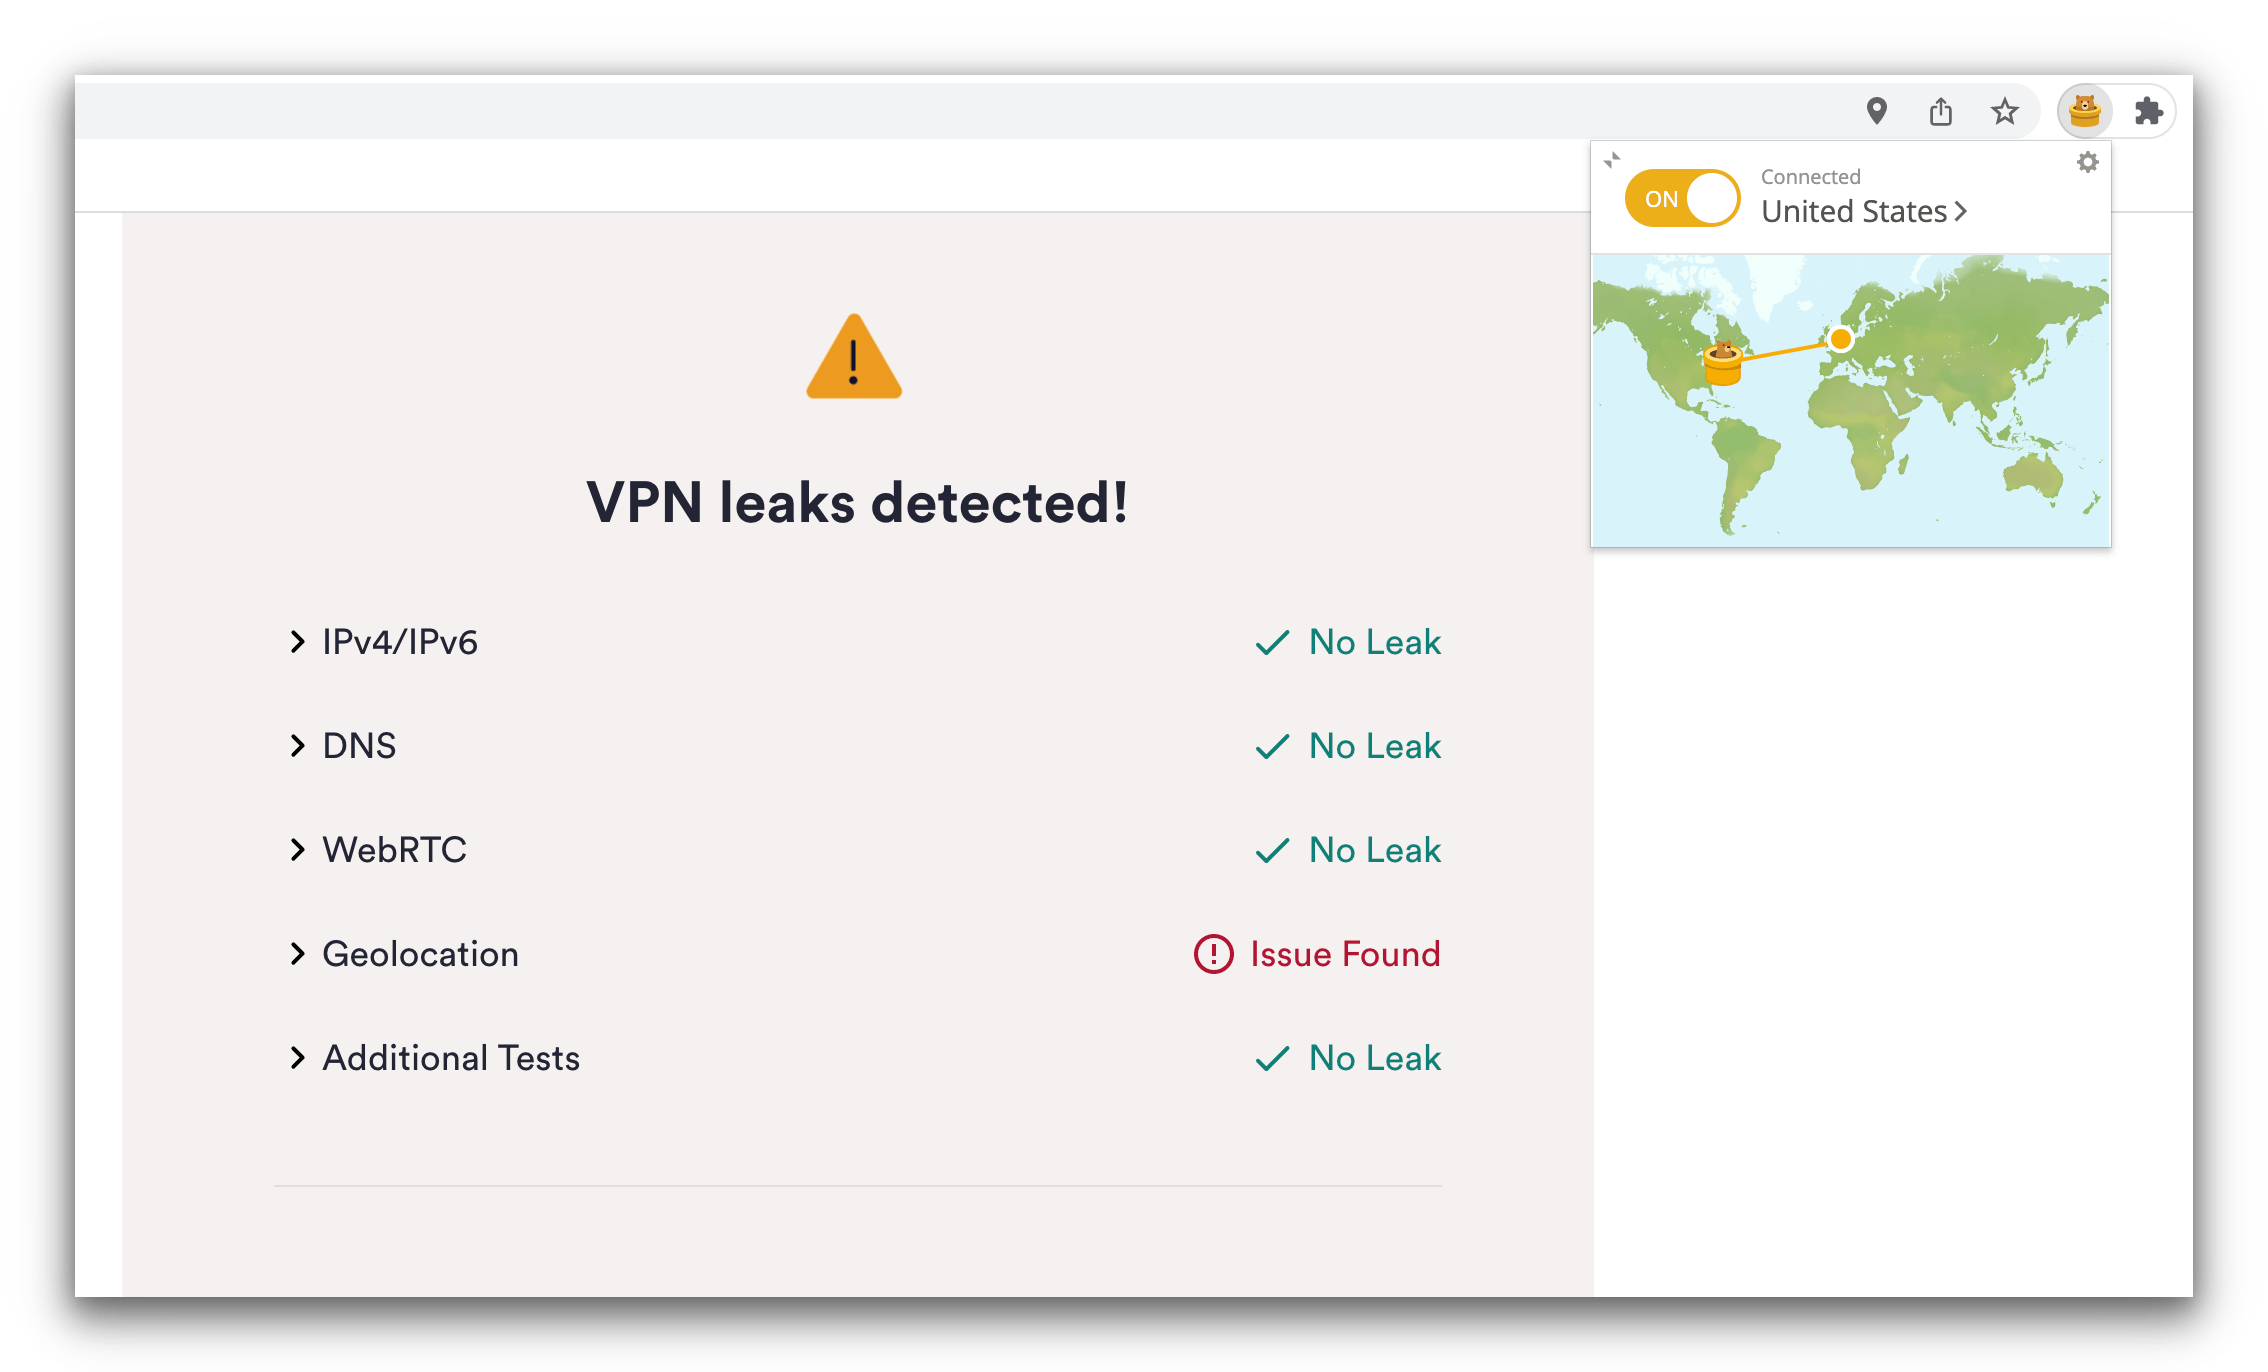 VPN 누출 테스트를 통해 TunnelBear에서 위치 정보가 노출 된다는 것을 발견했습니다.